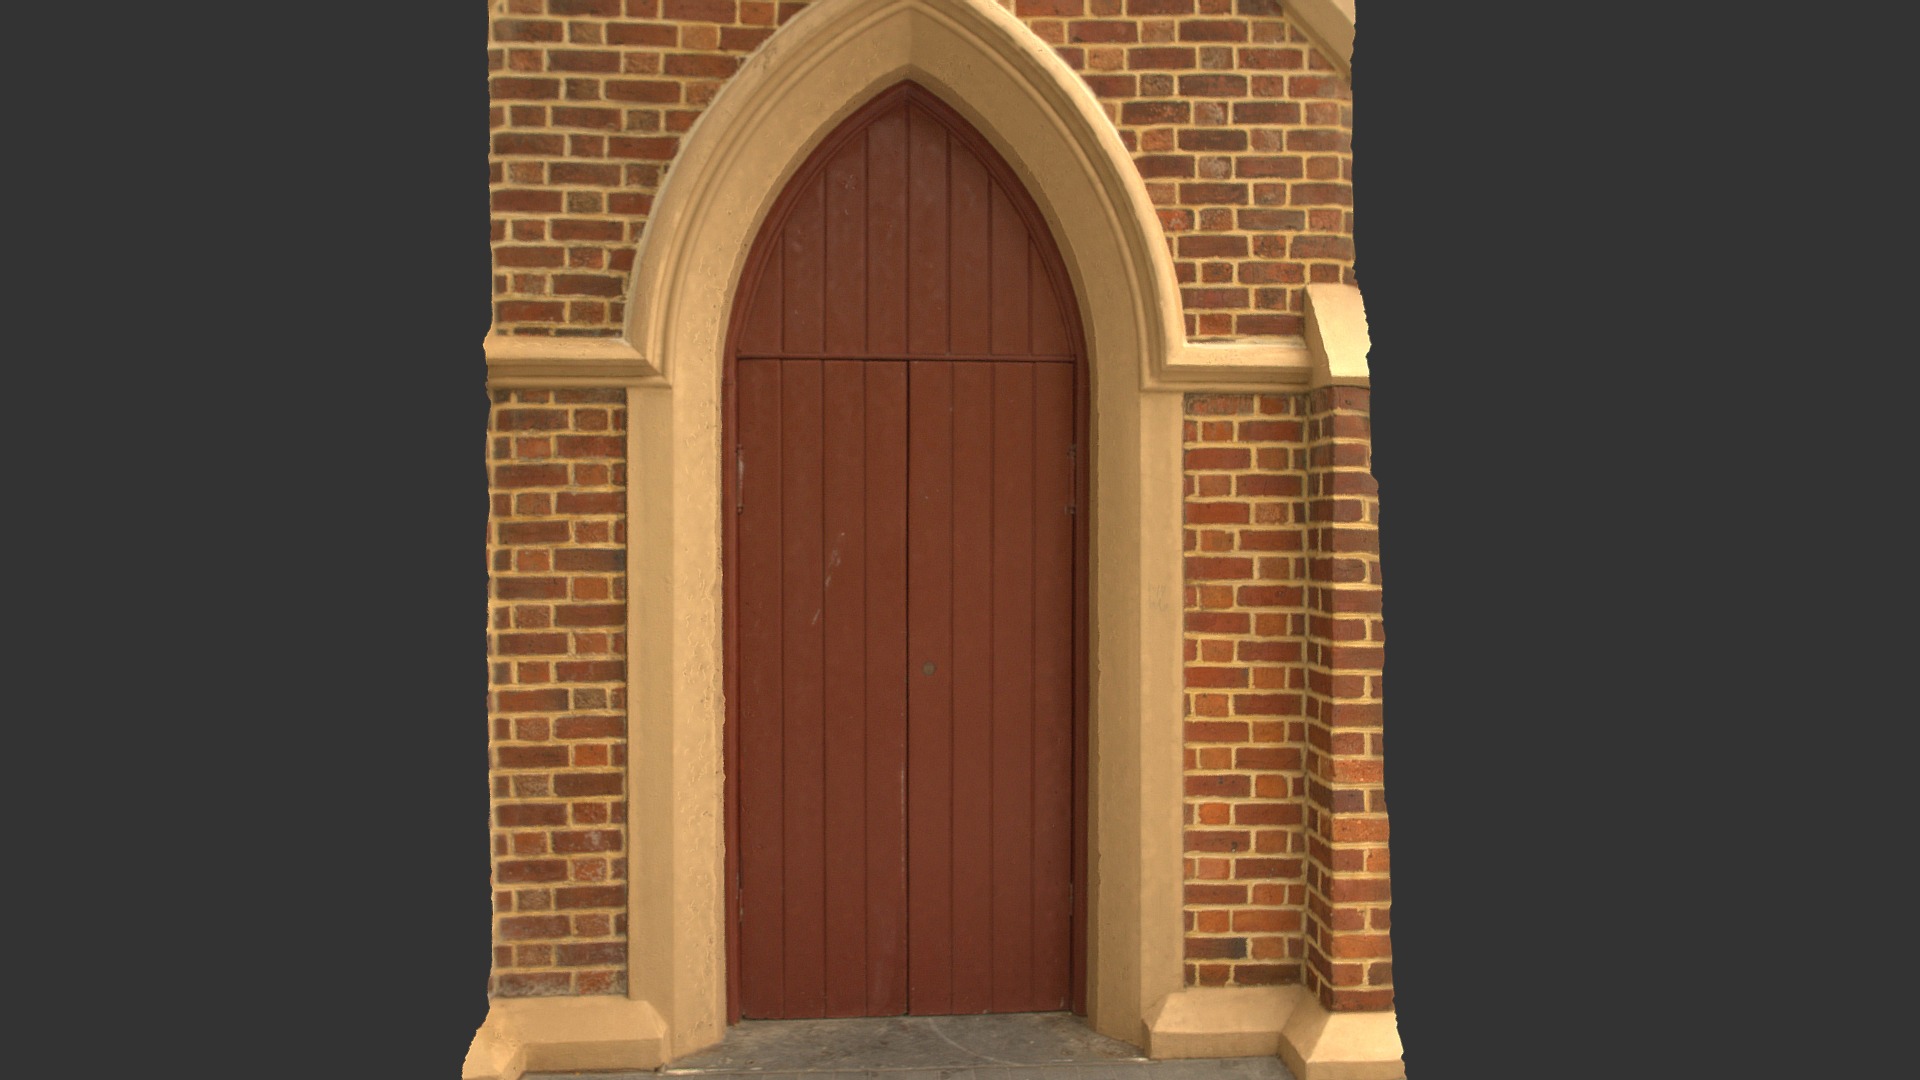 3D model Church door - This is a 3D model of the Church door. The 3D model is about a door in a brick building.